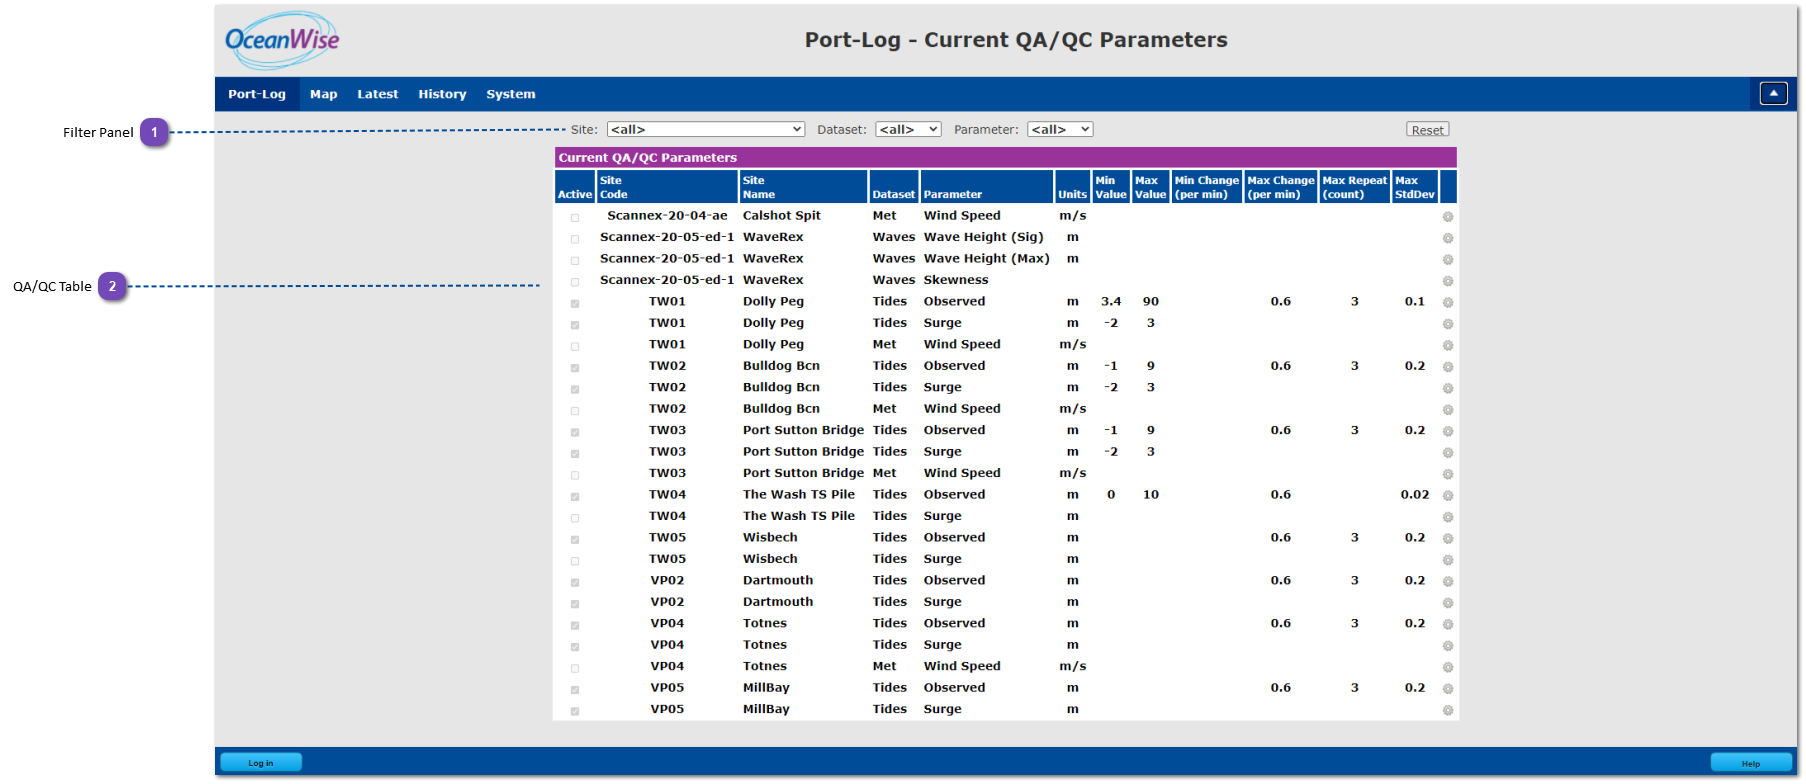 5.3 QA/QC Parameters